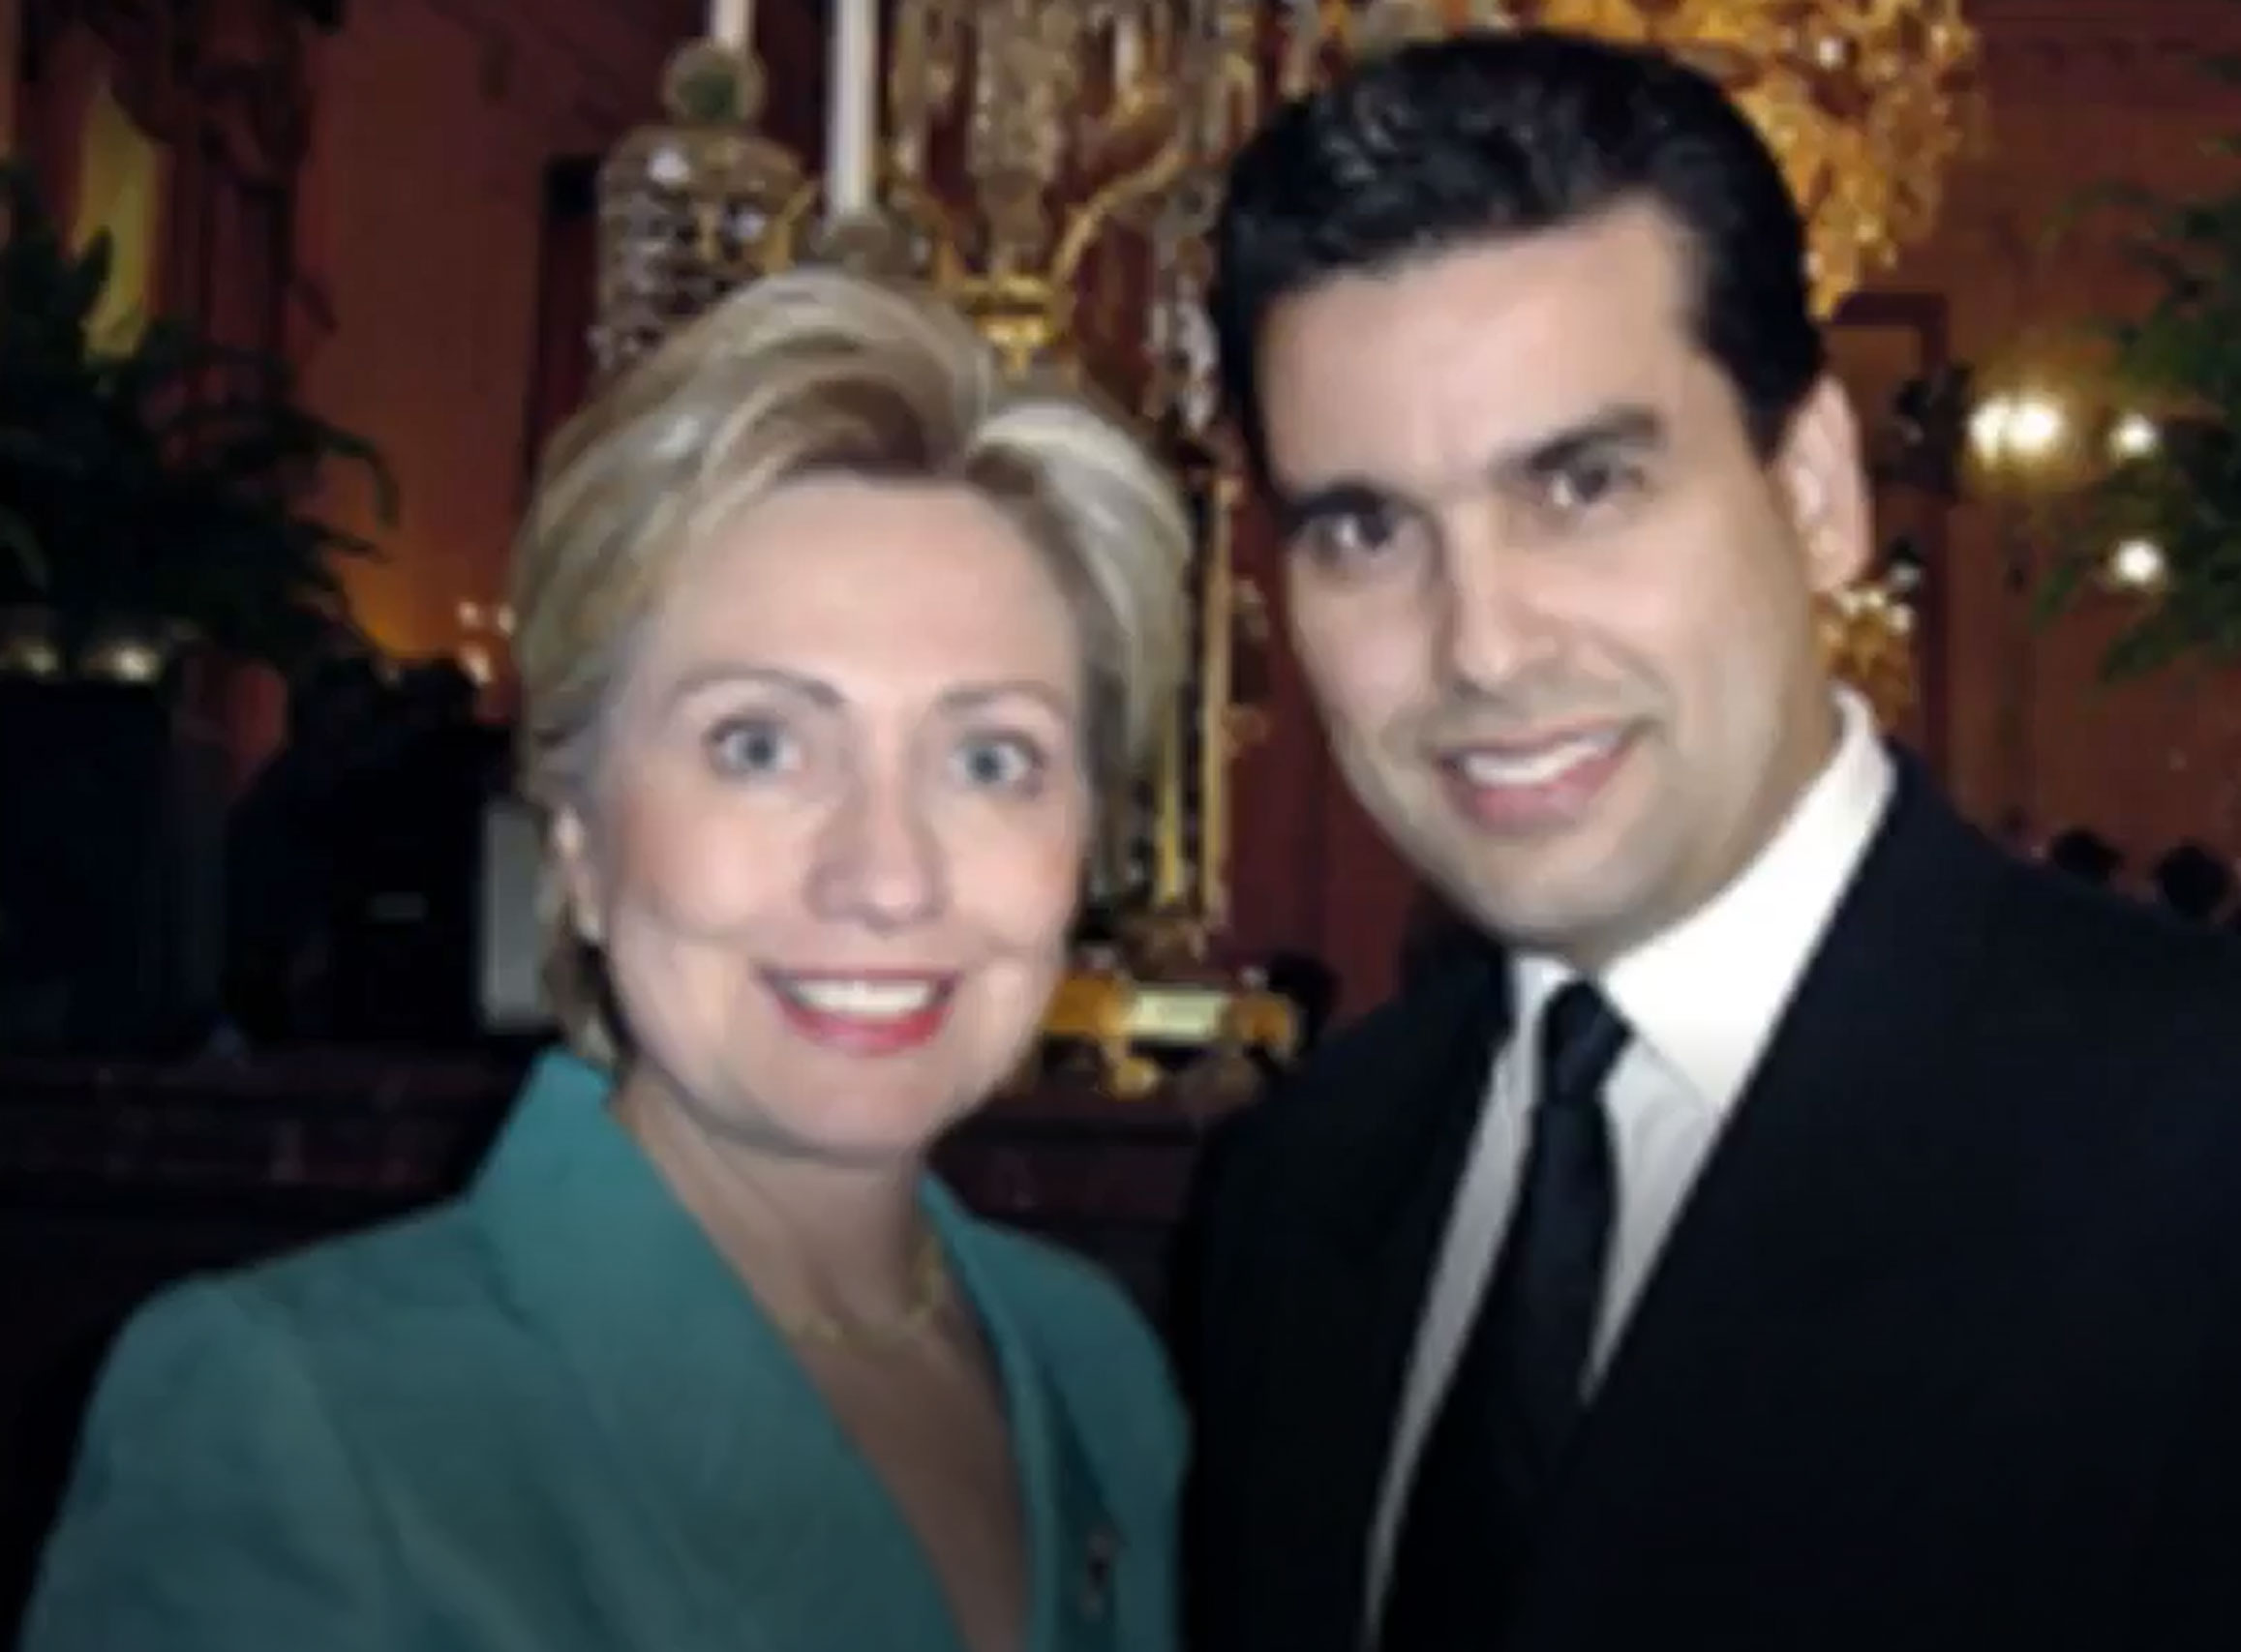 4-William-met-with-Hillary-Clinton.jpg